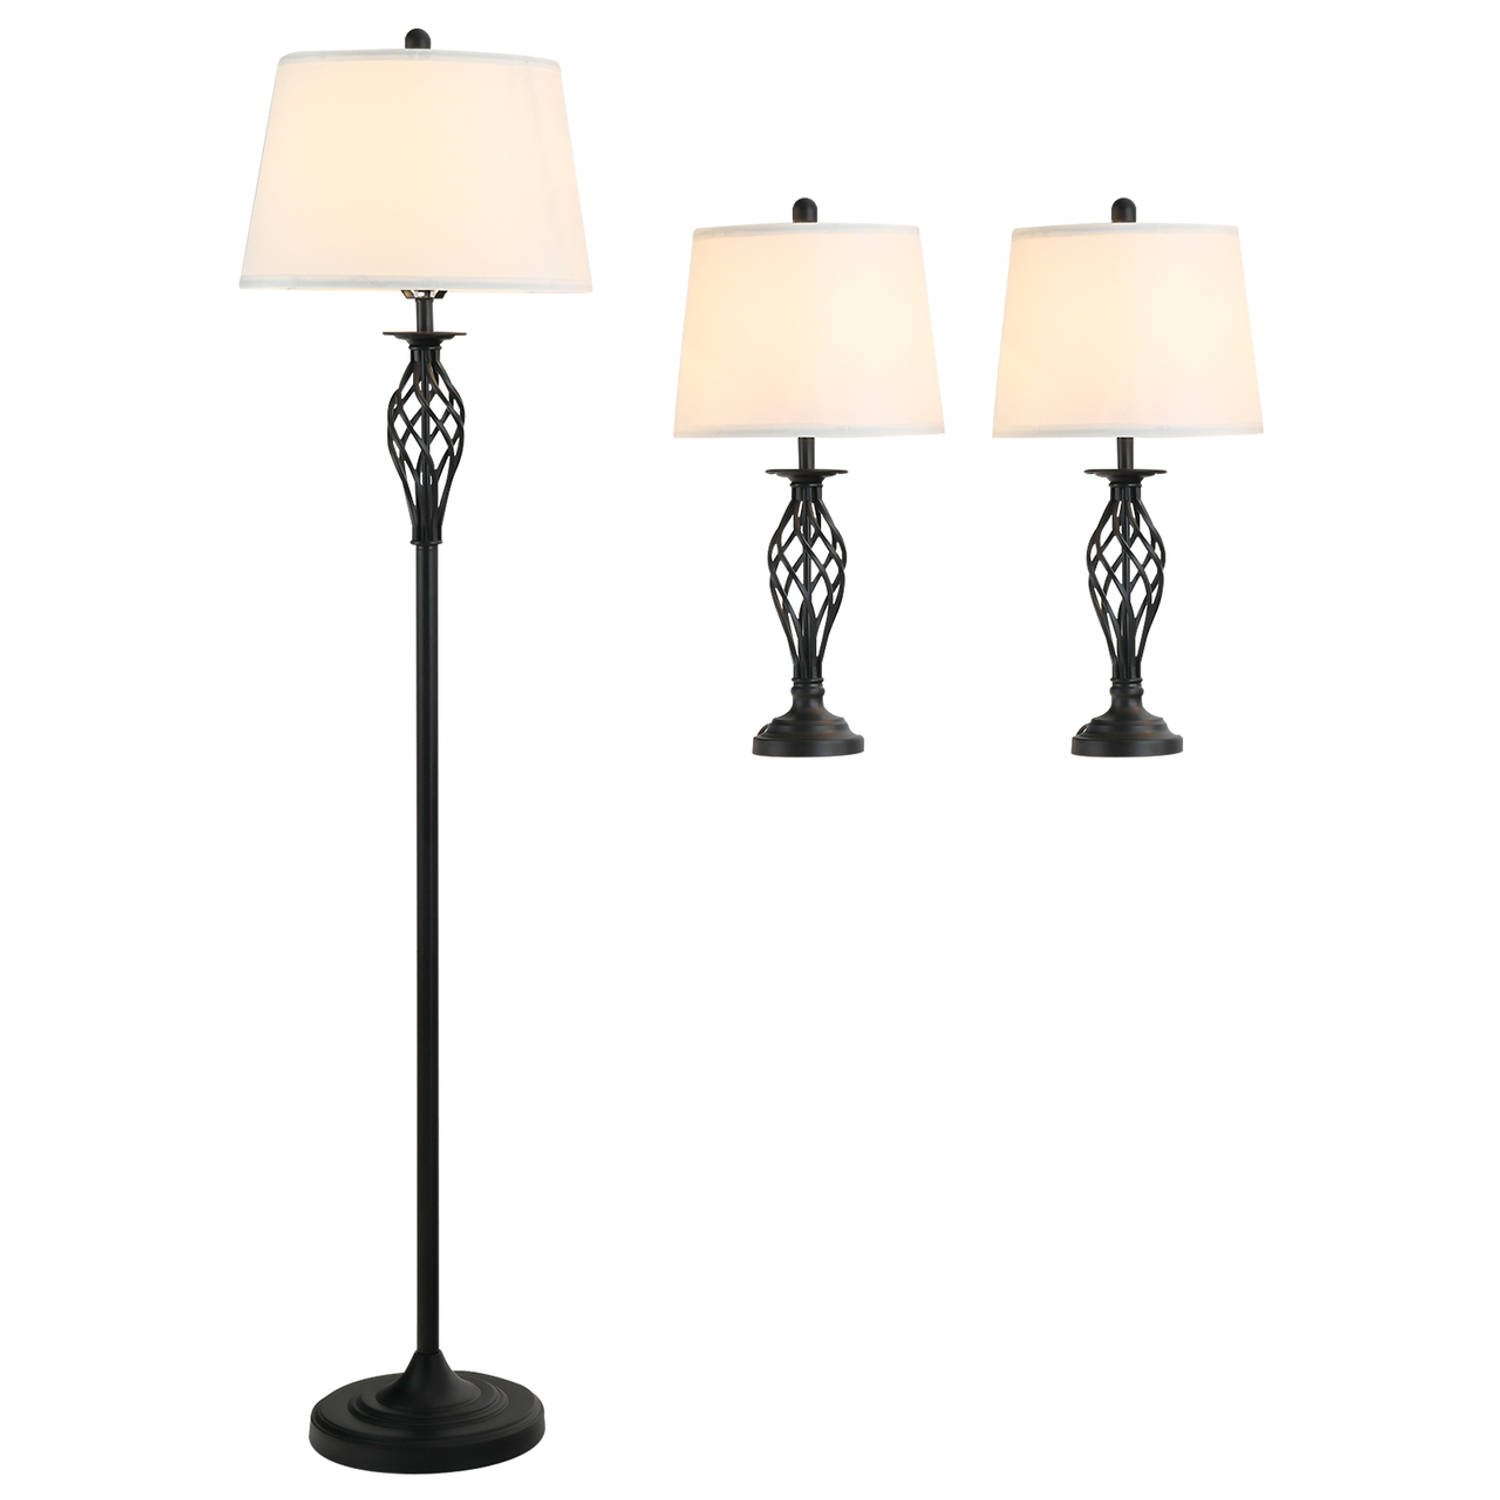 set van 1 lamp en 2 tafellampen - Vloerlamp - Stalamp tafellamp - Vintage - Klassiek - Zwart/wit |